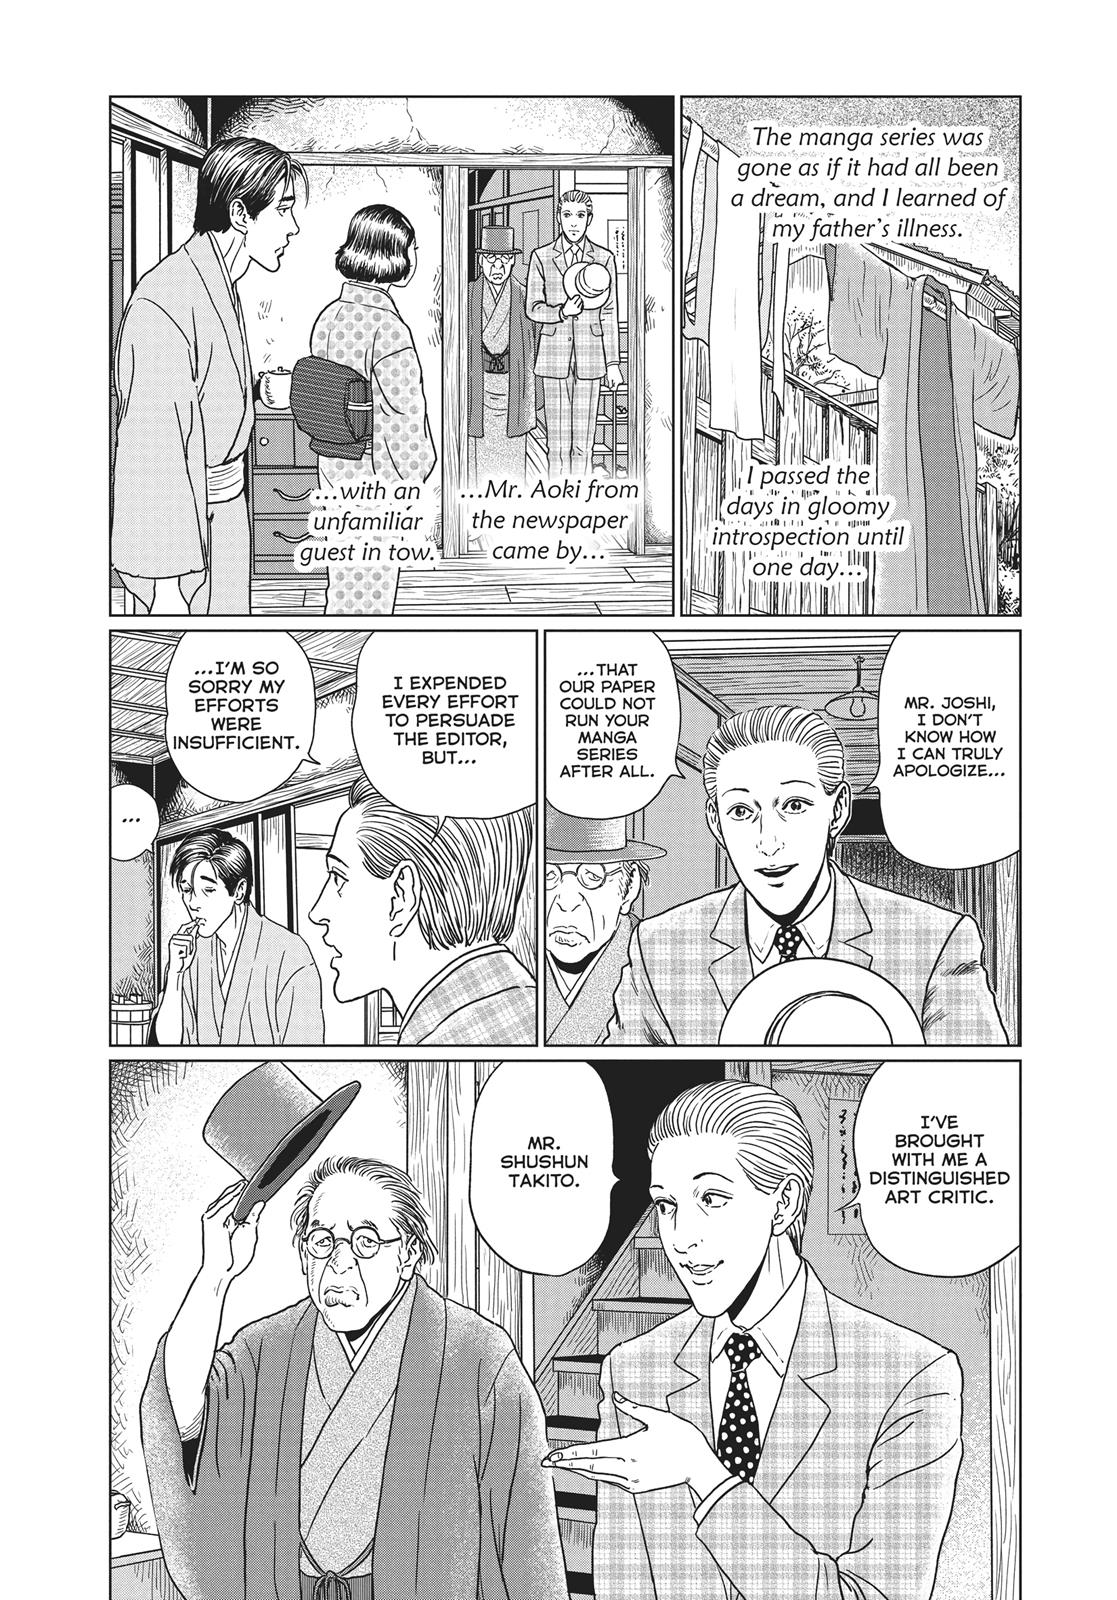 No Longer Human (Junji Itou) - Page 2